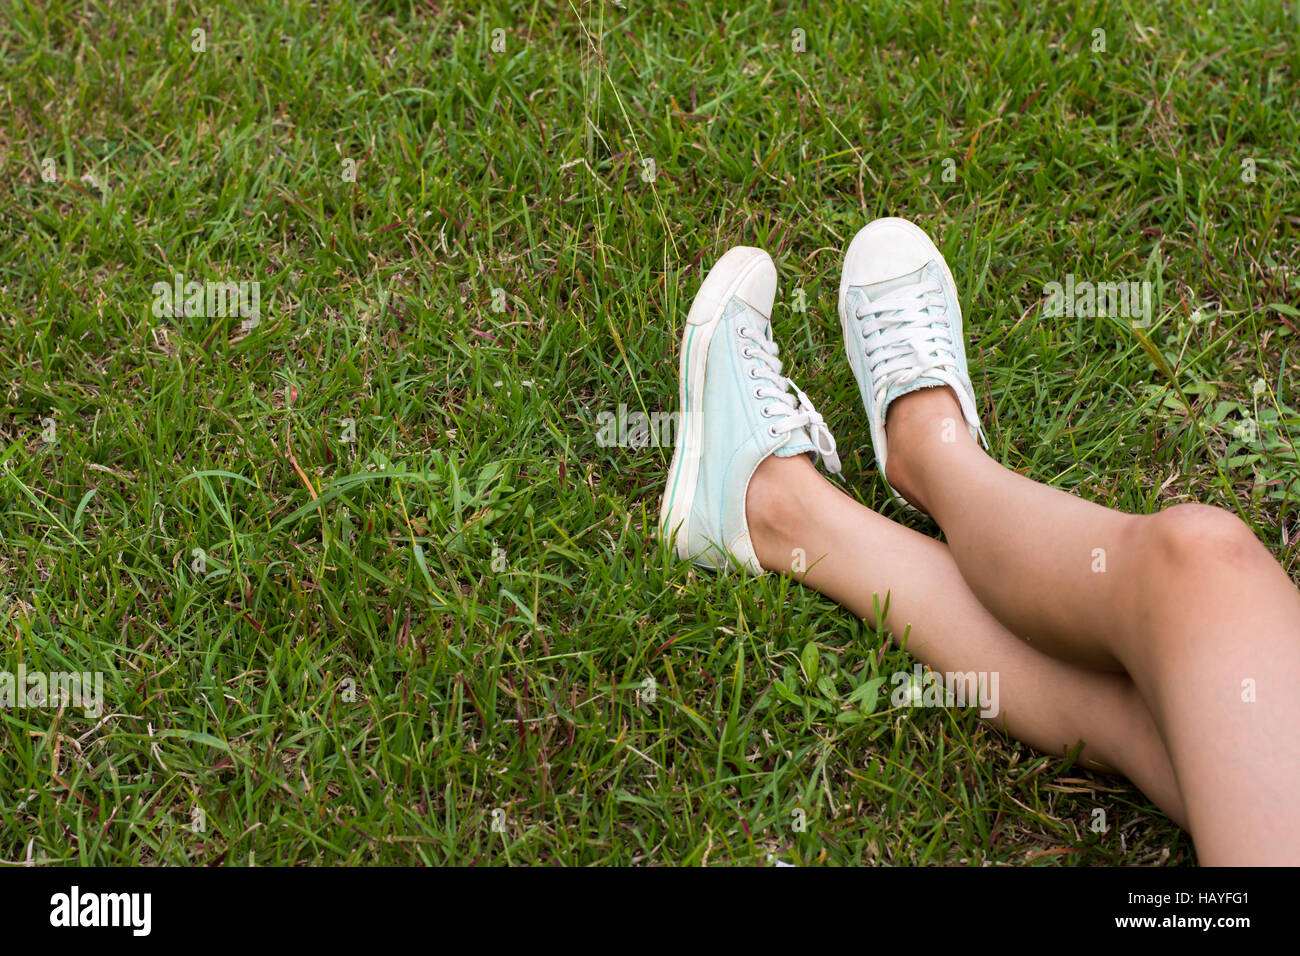 Woman feet on grass Stock Photo - Alamy